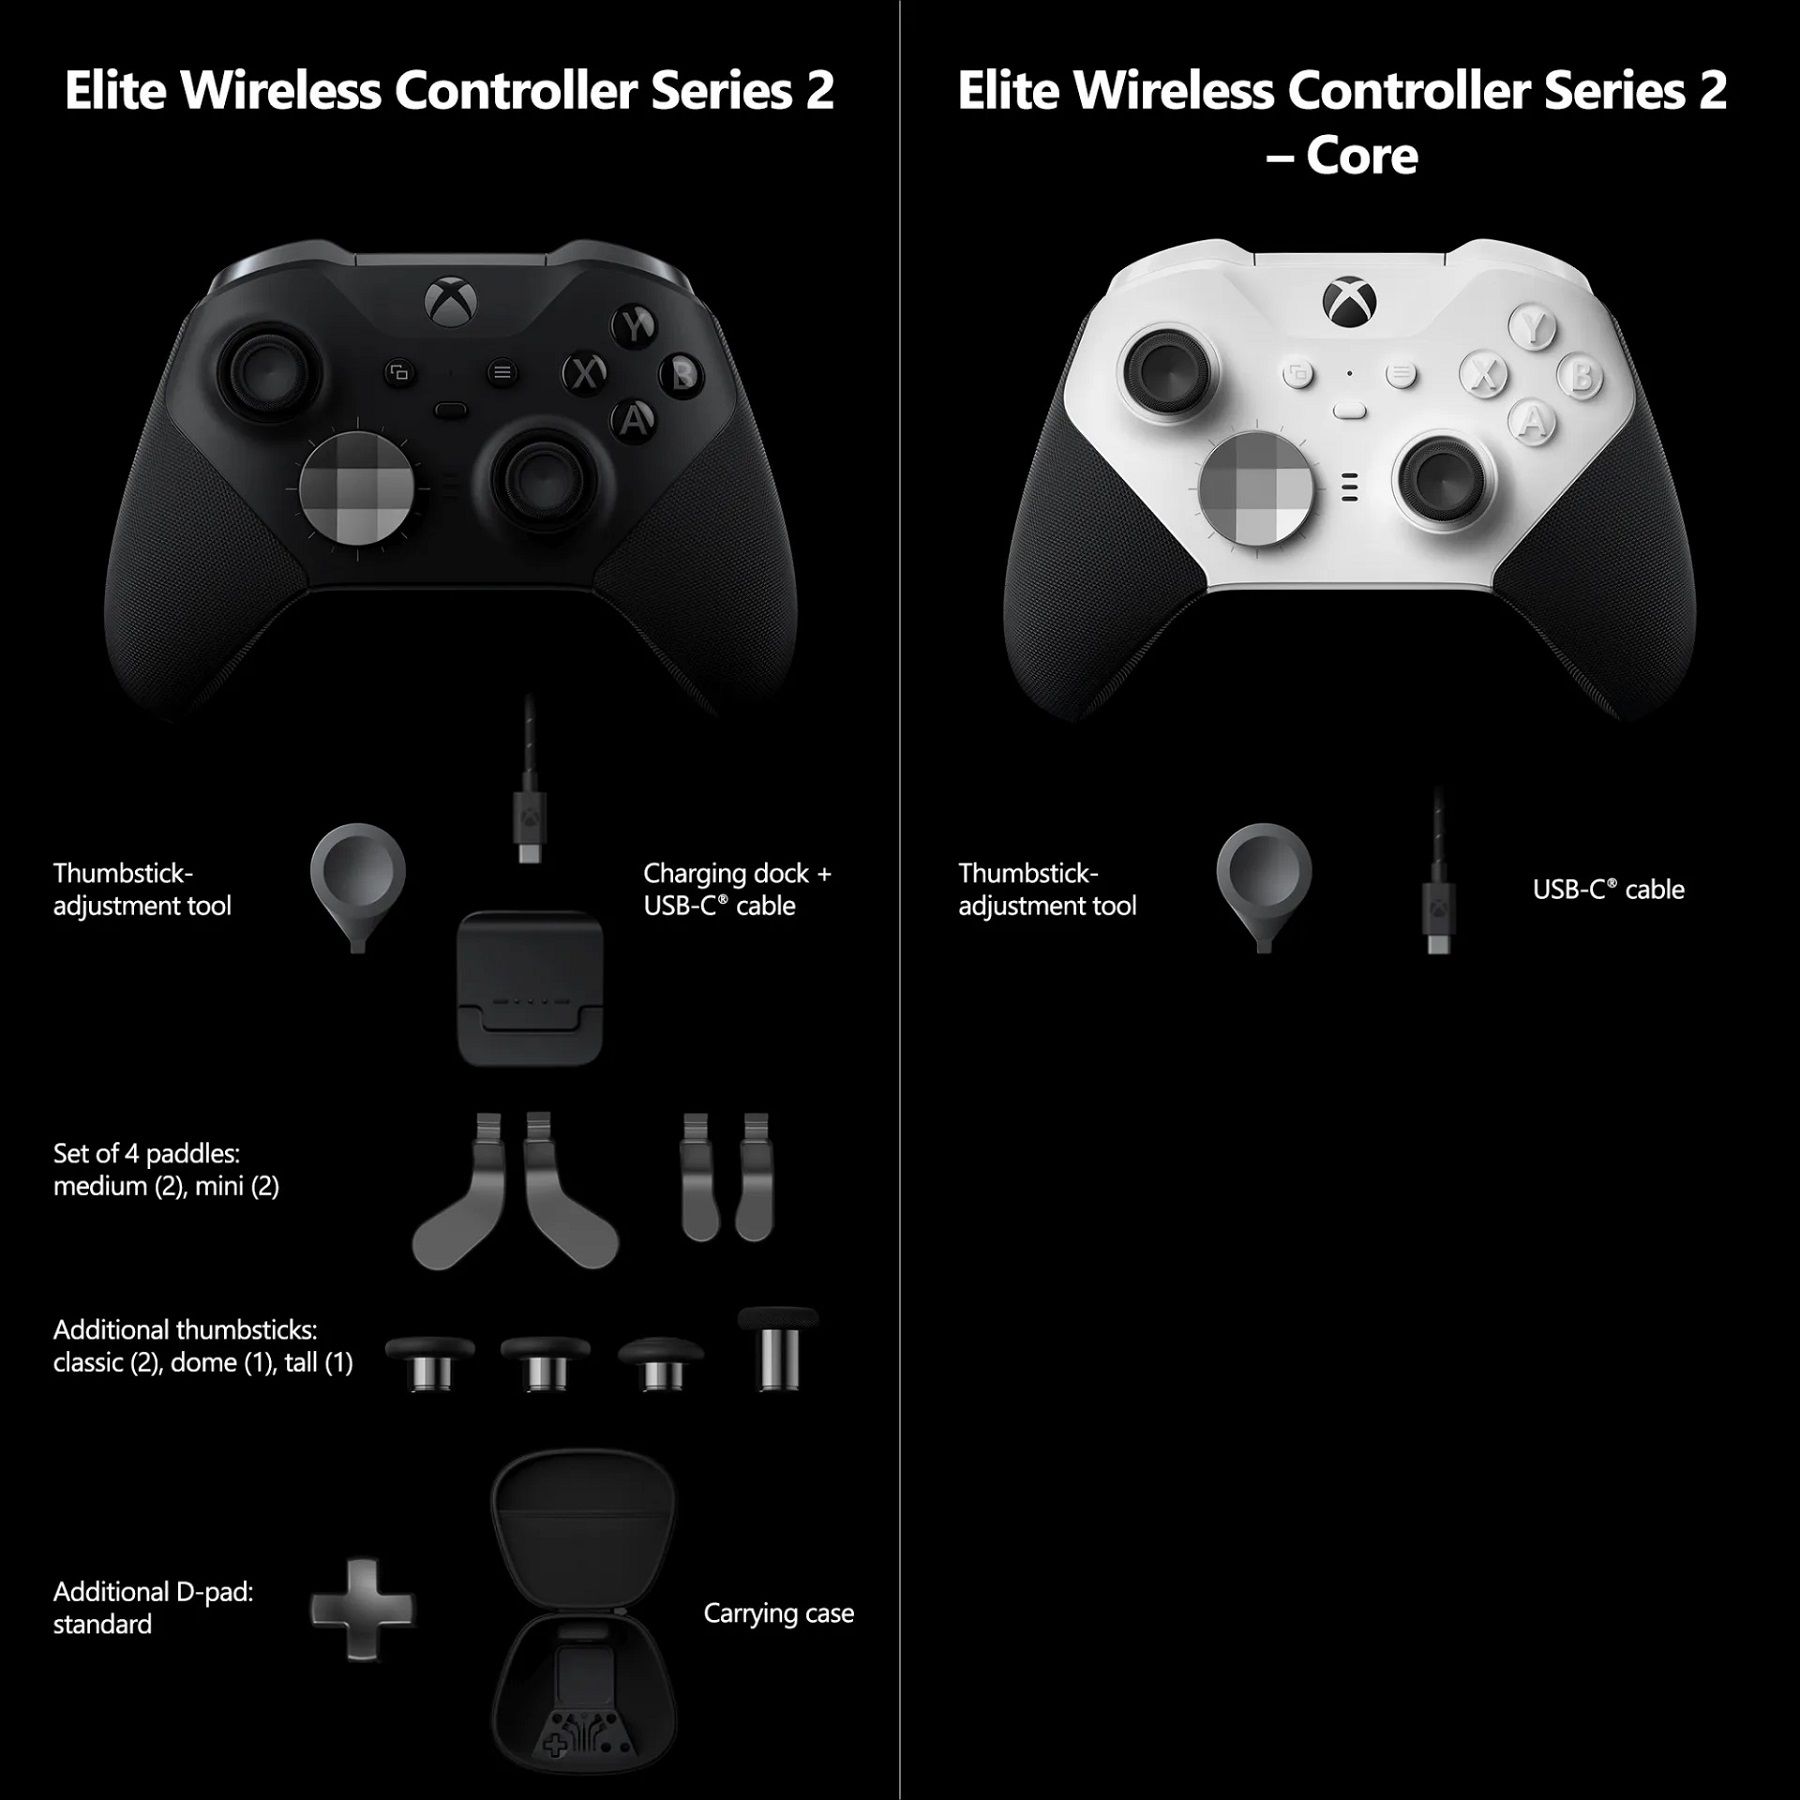 xbox elite controller series 2 core differences